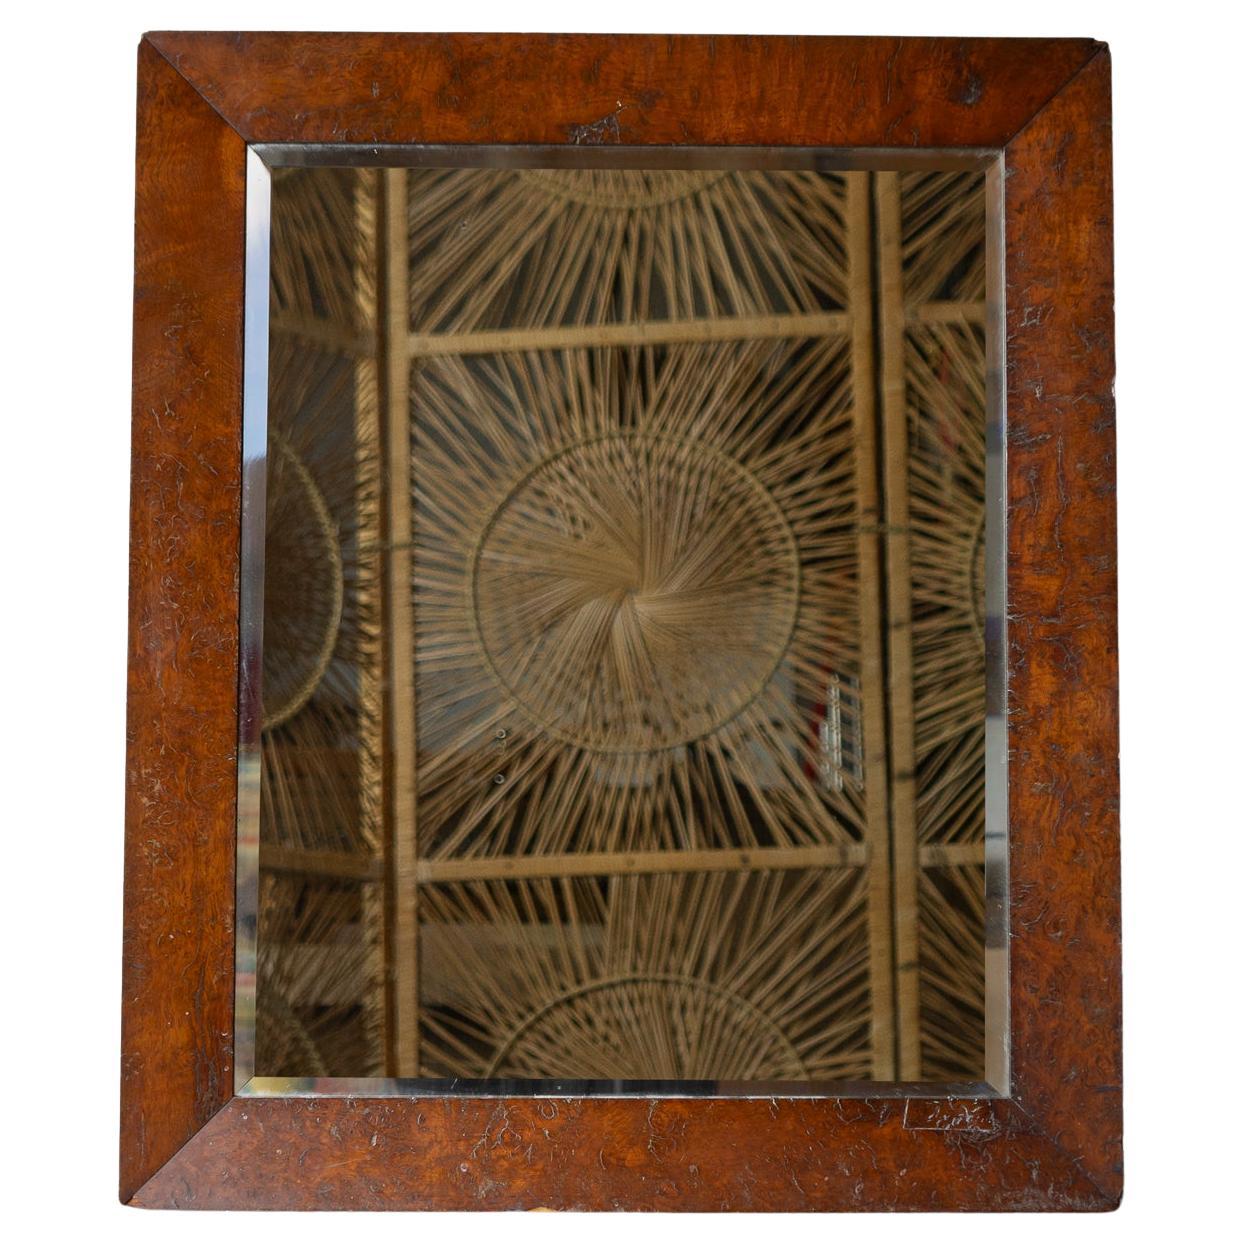 Antique Victorien Pollard Oak Wall/Table Mirror, 19ème siècle